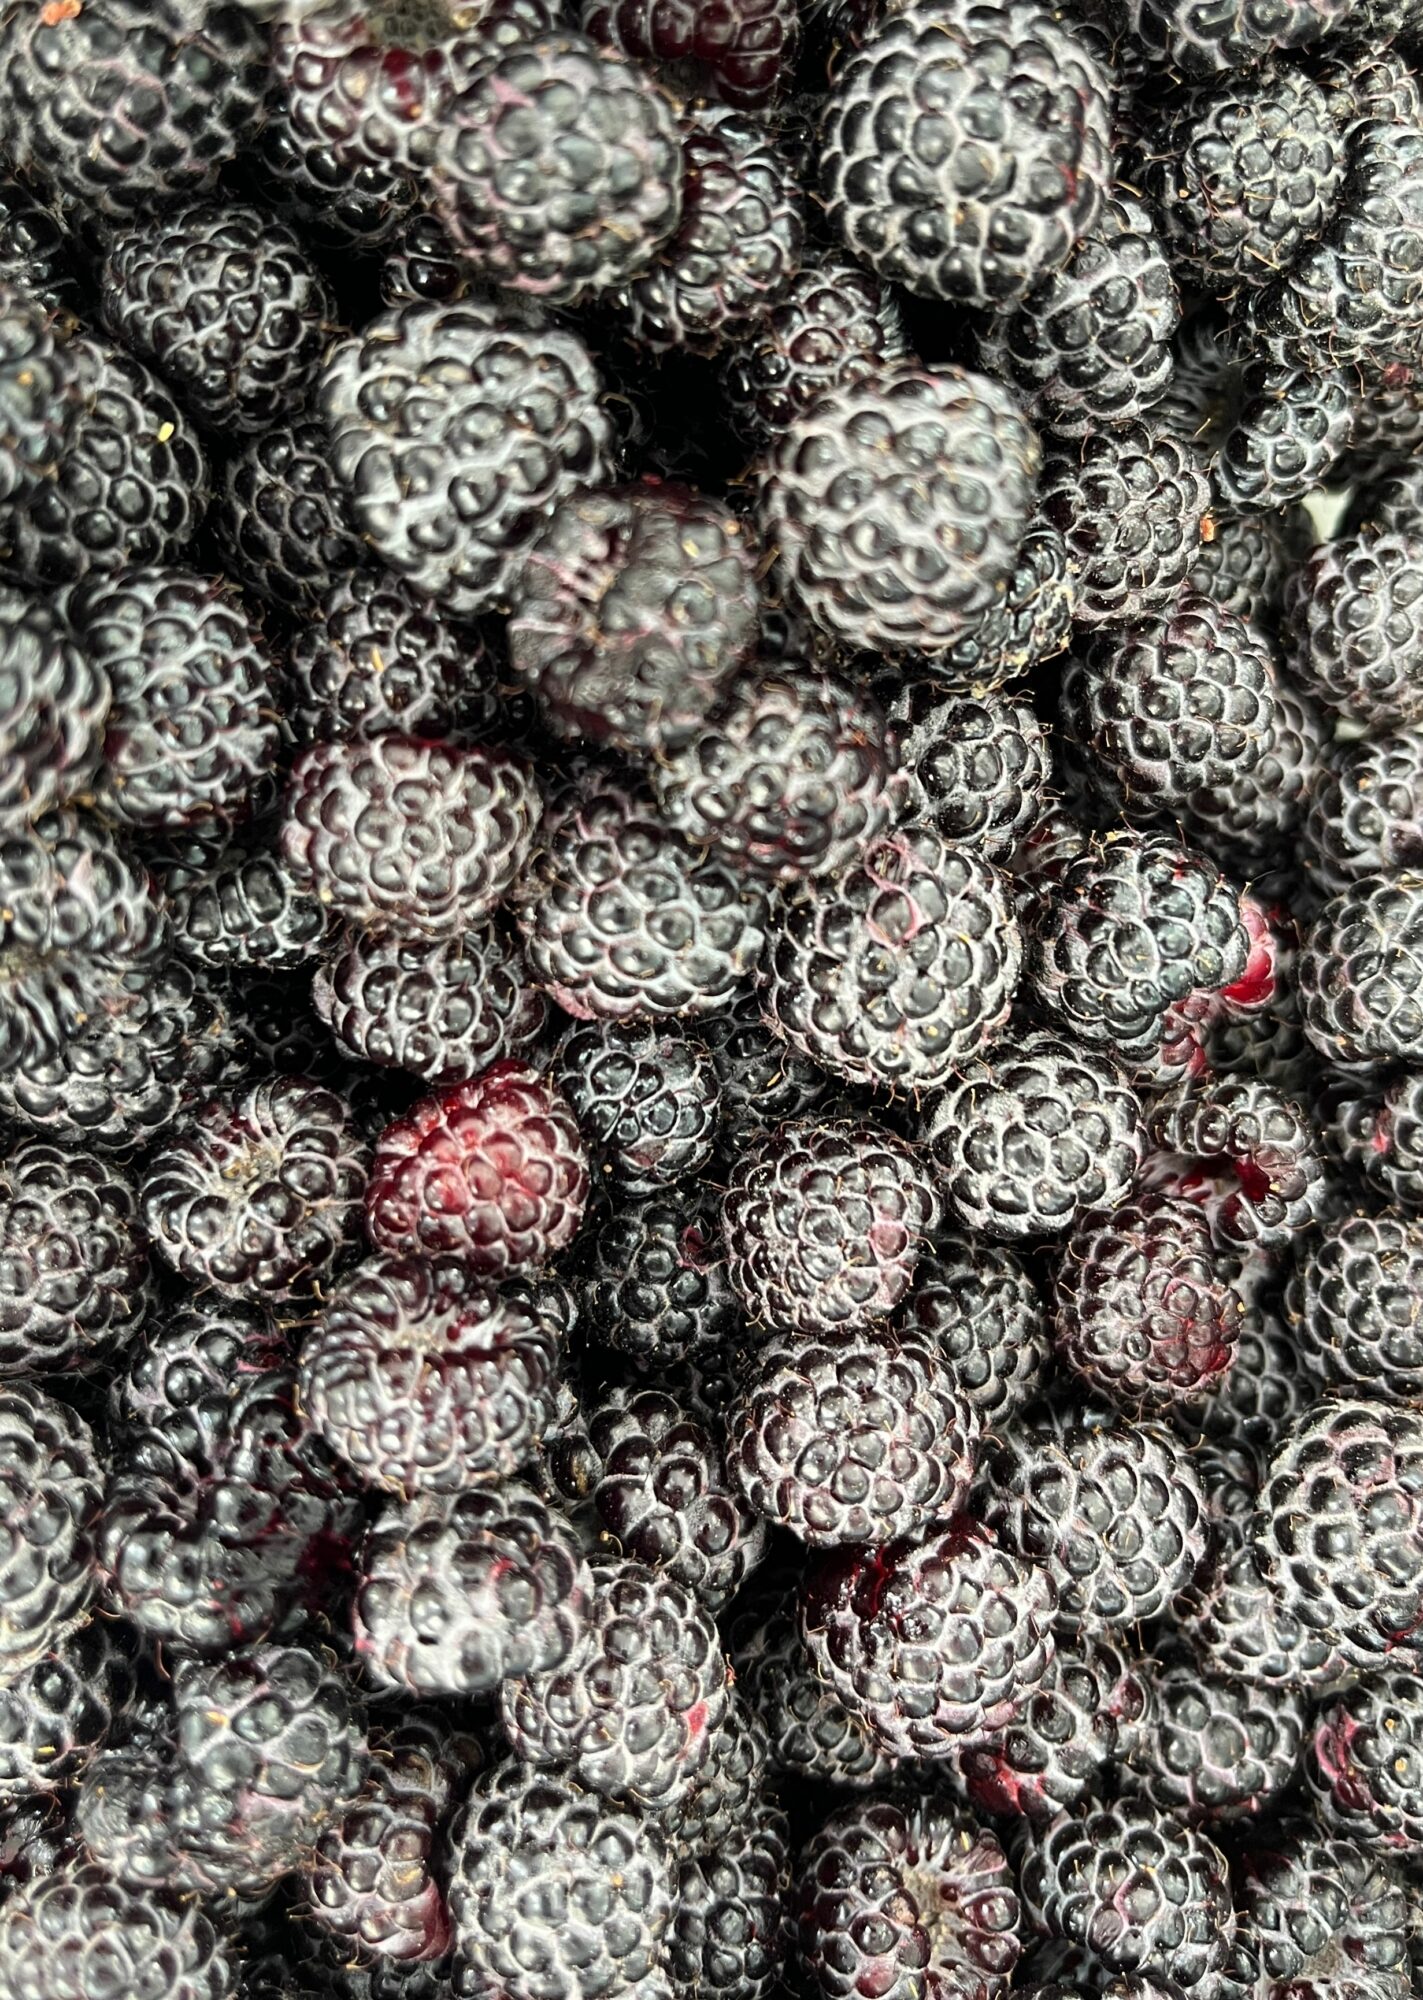 Blackcap raspberry harvest